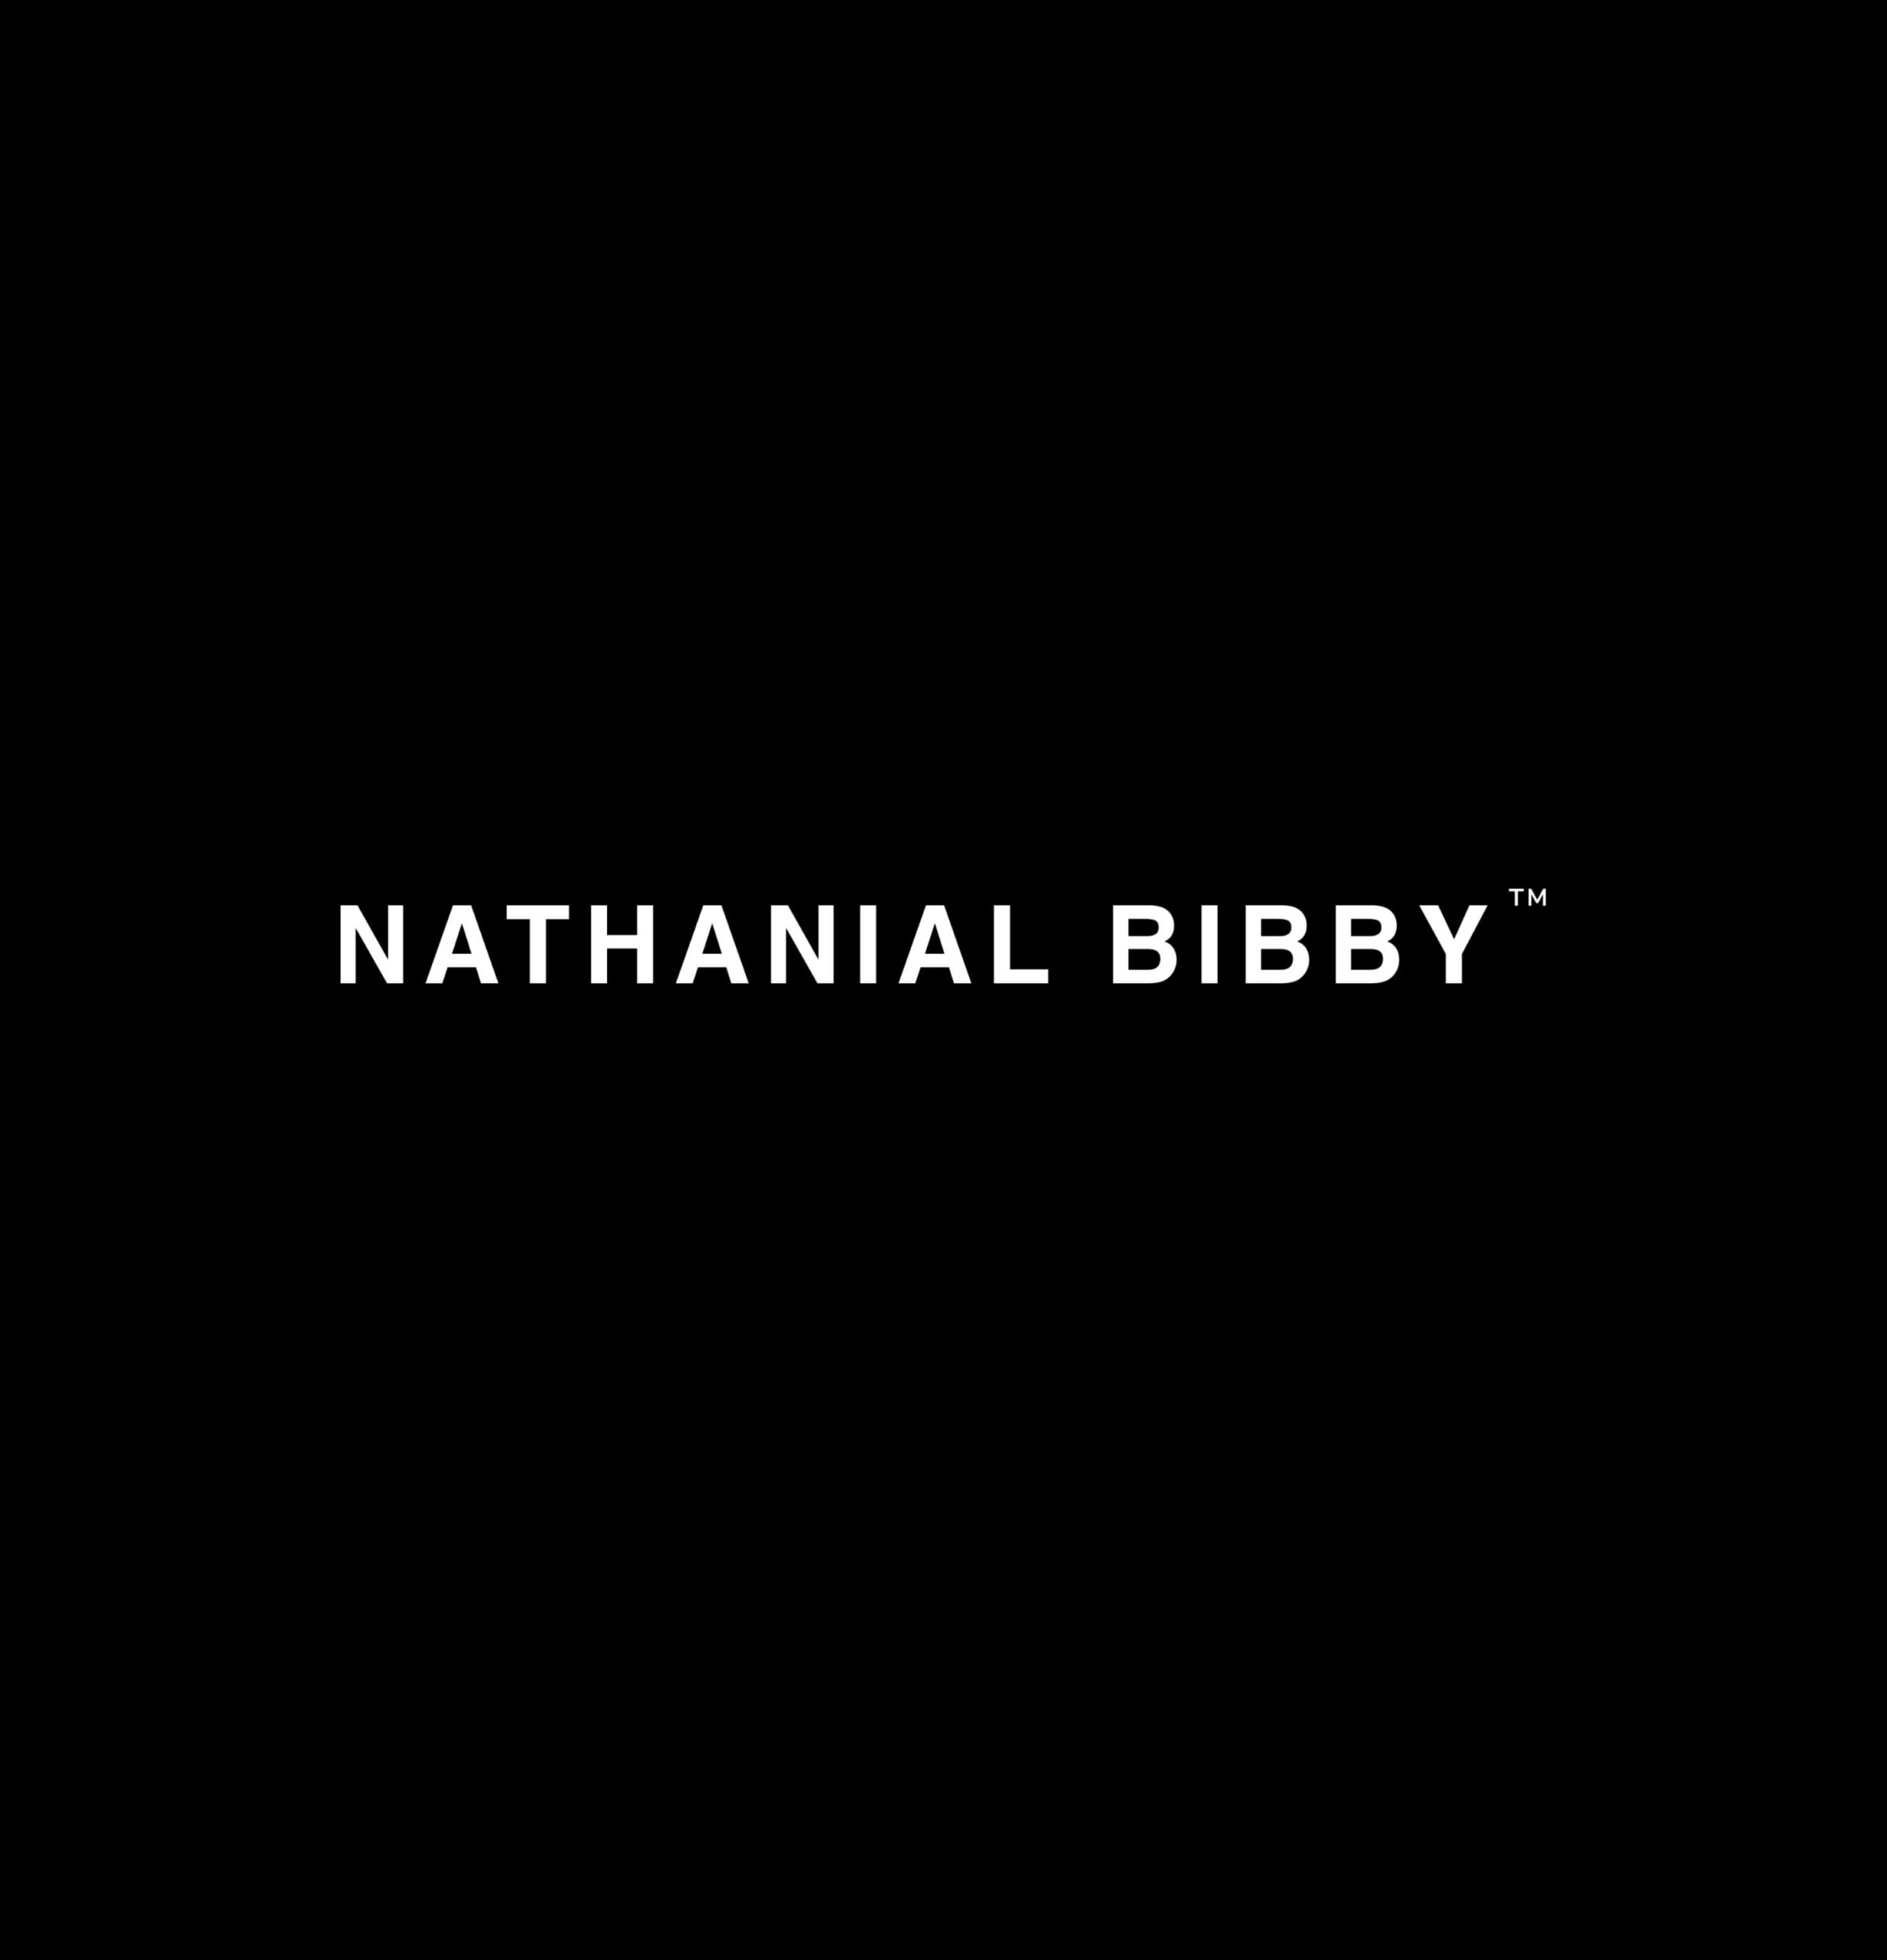 Nathanial Bibby logo - Linked In marketing